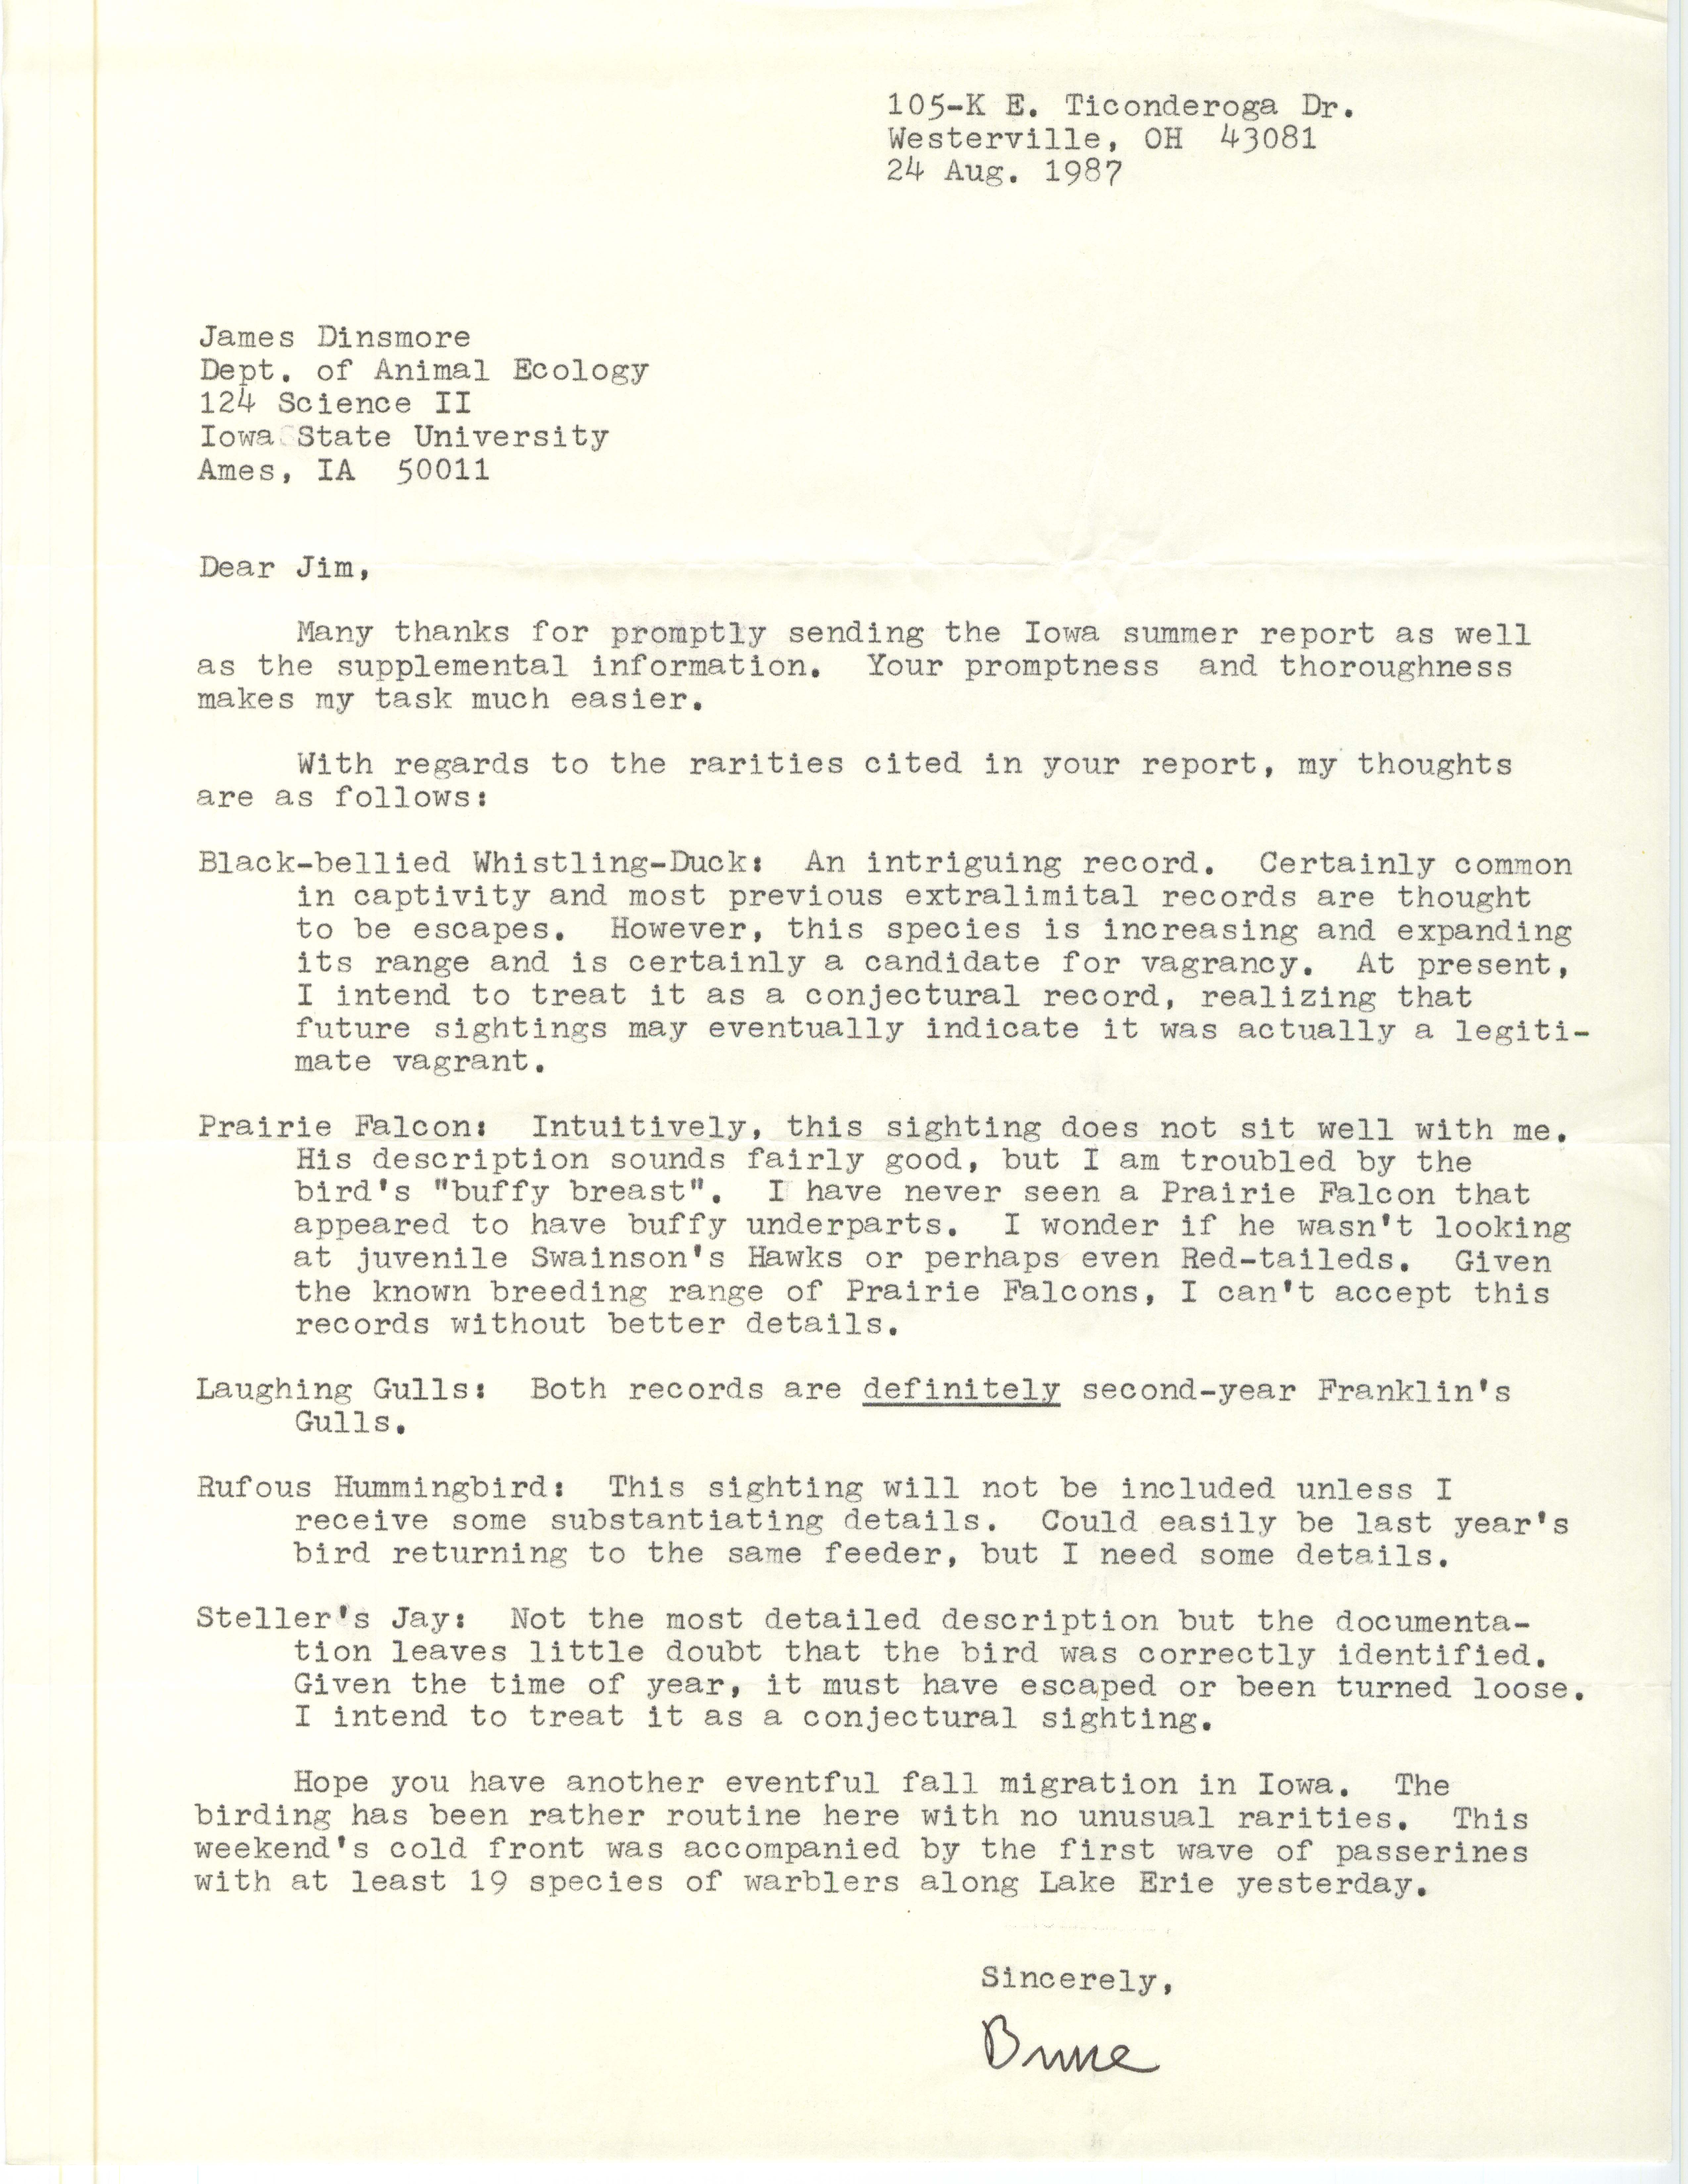 Bruce G. Peterjohn letter to James J. Dinsmore regarding the Iowa summer bird report and rare bird sightings, August 24, 1987